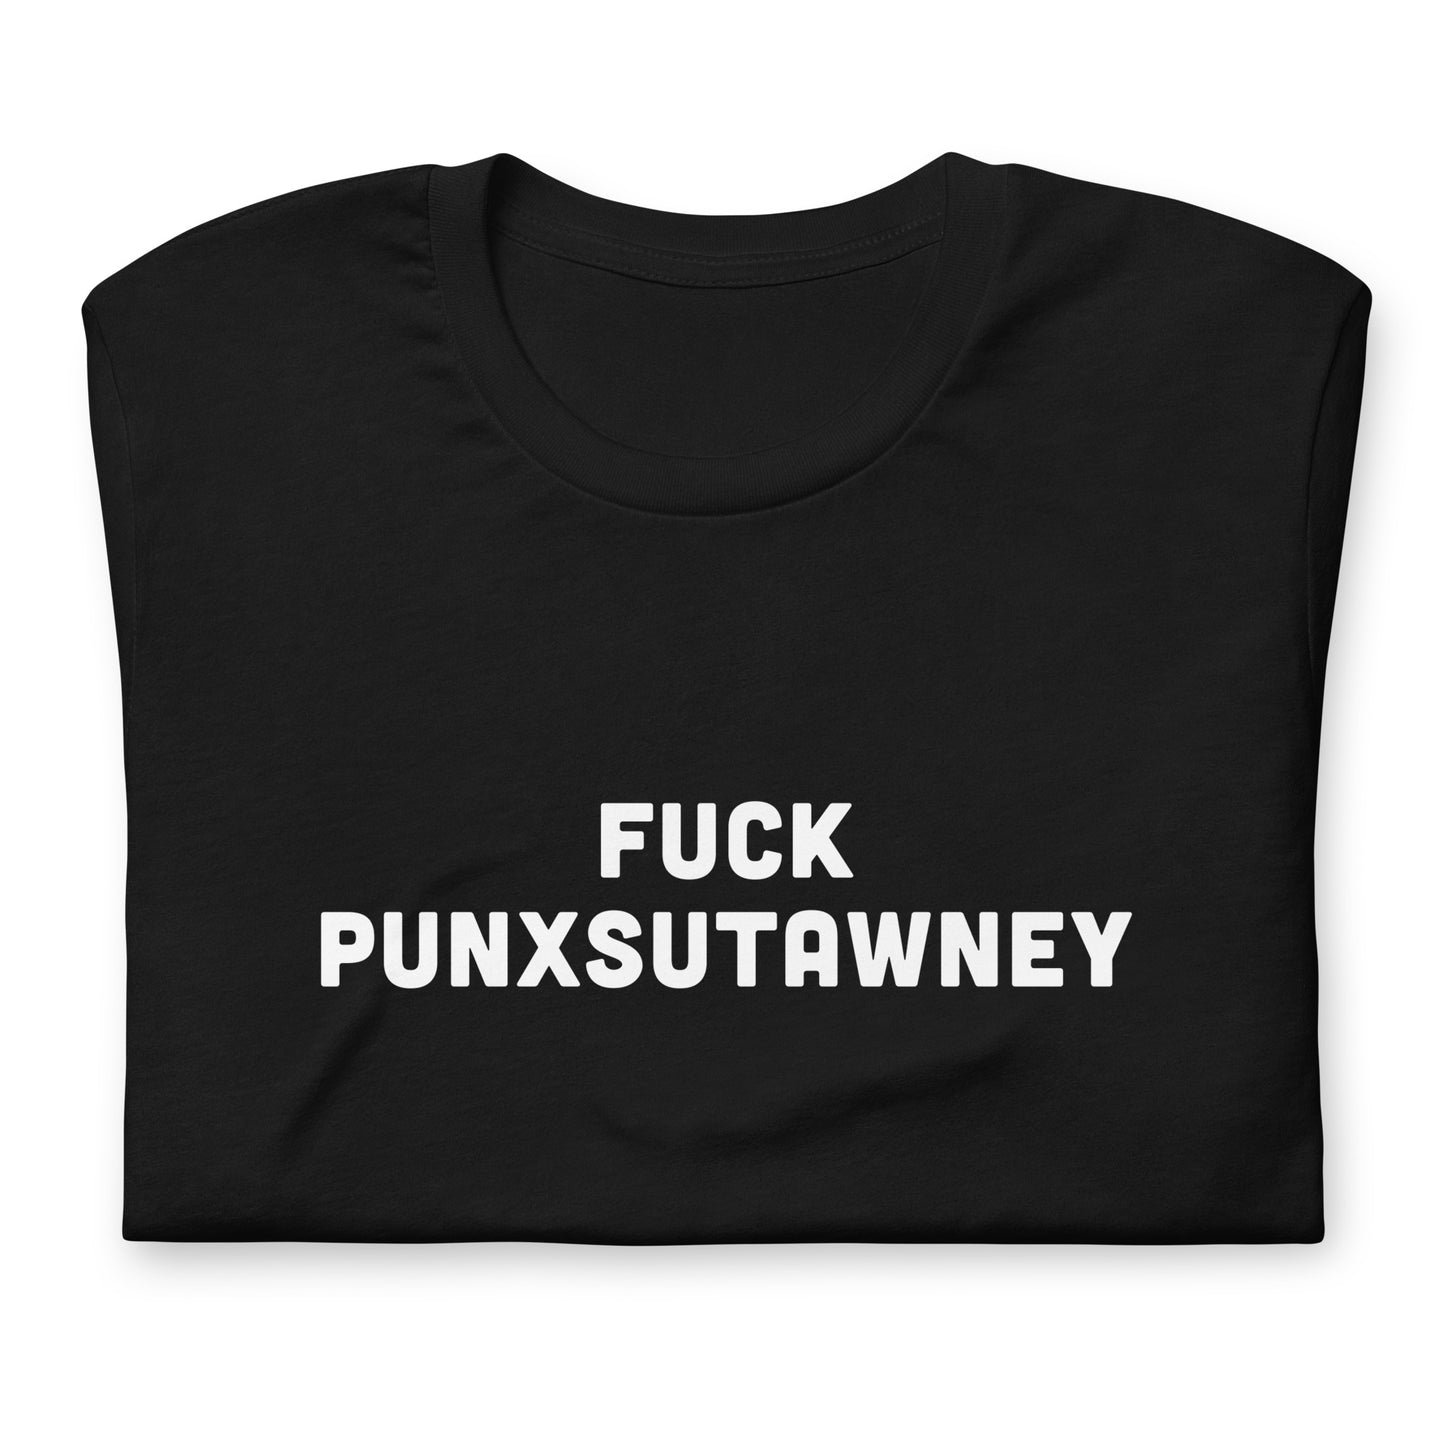 Fuck Punxsutawney T-Shirt Size M Color Black